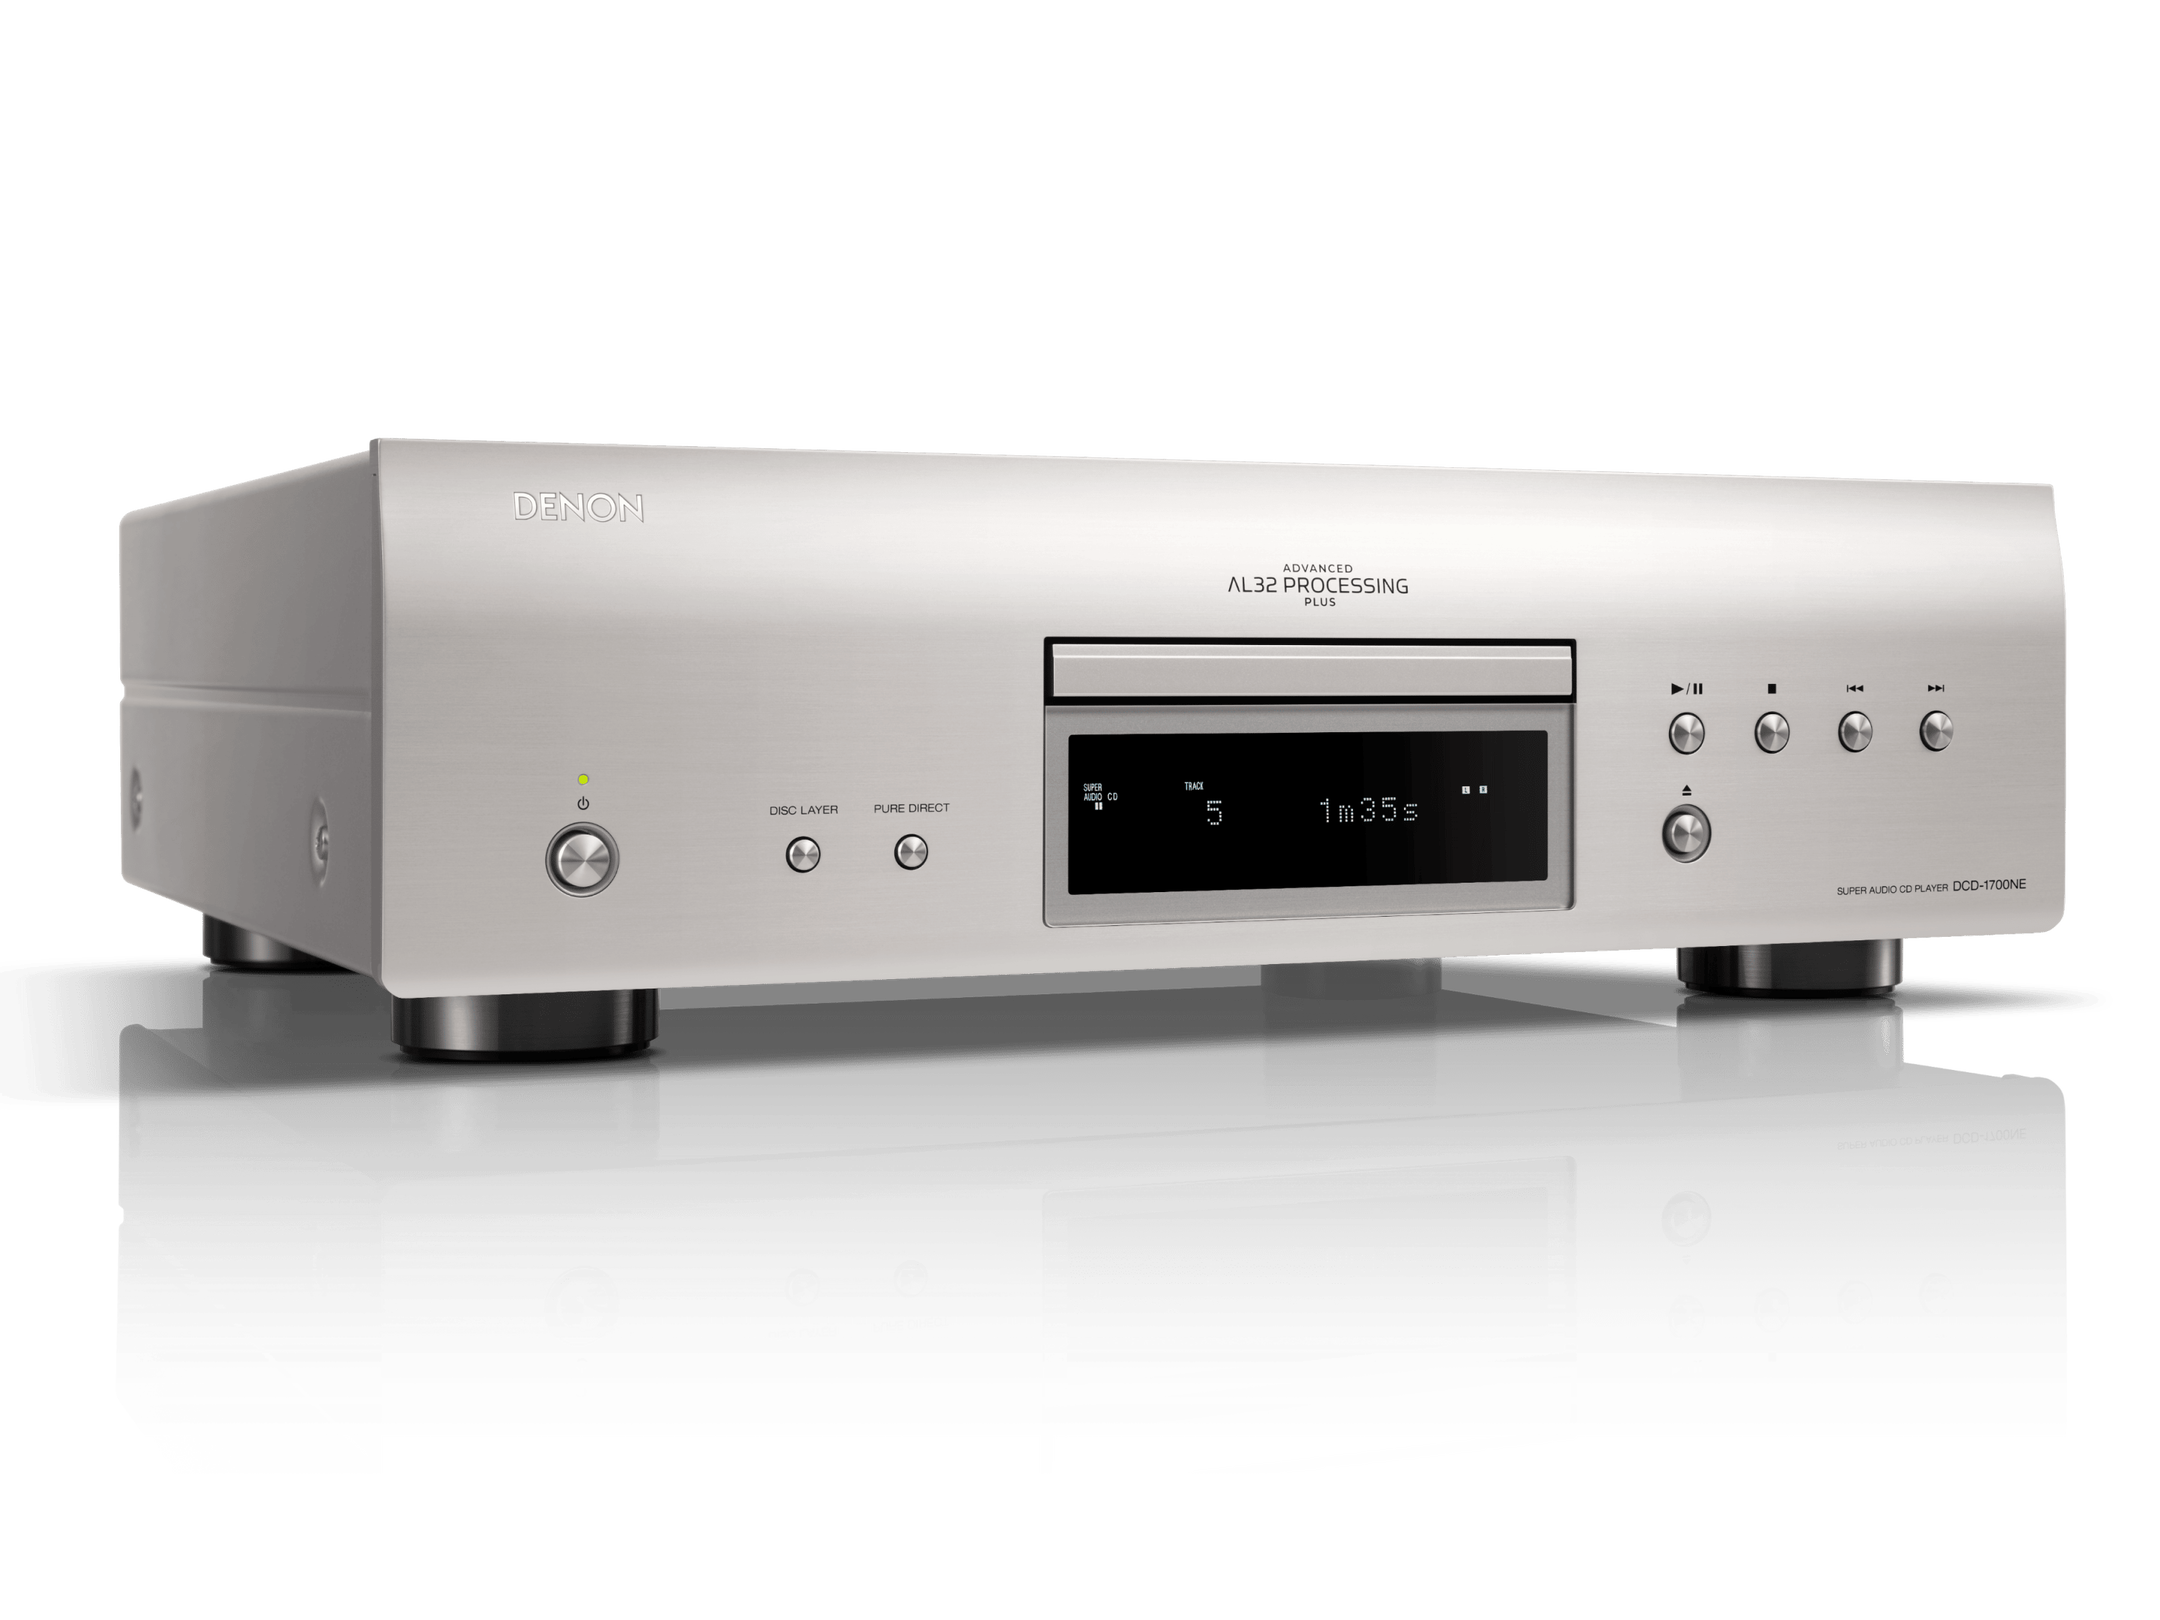 DCD-1700NE - CD/SACD player with US AL32 Processing - Denon Plus Advanced 